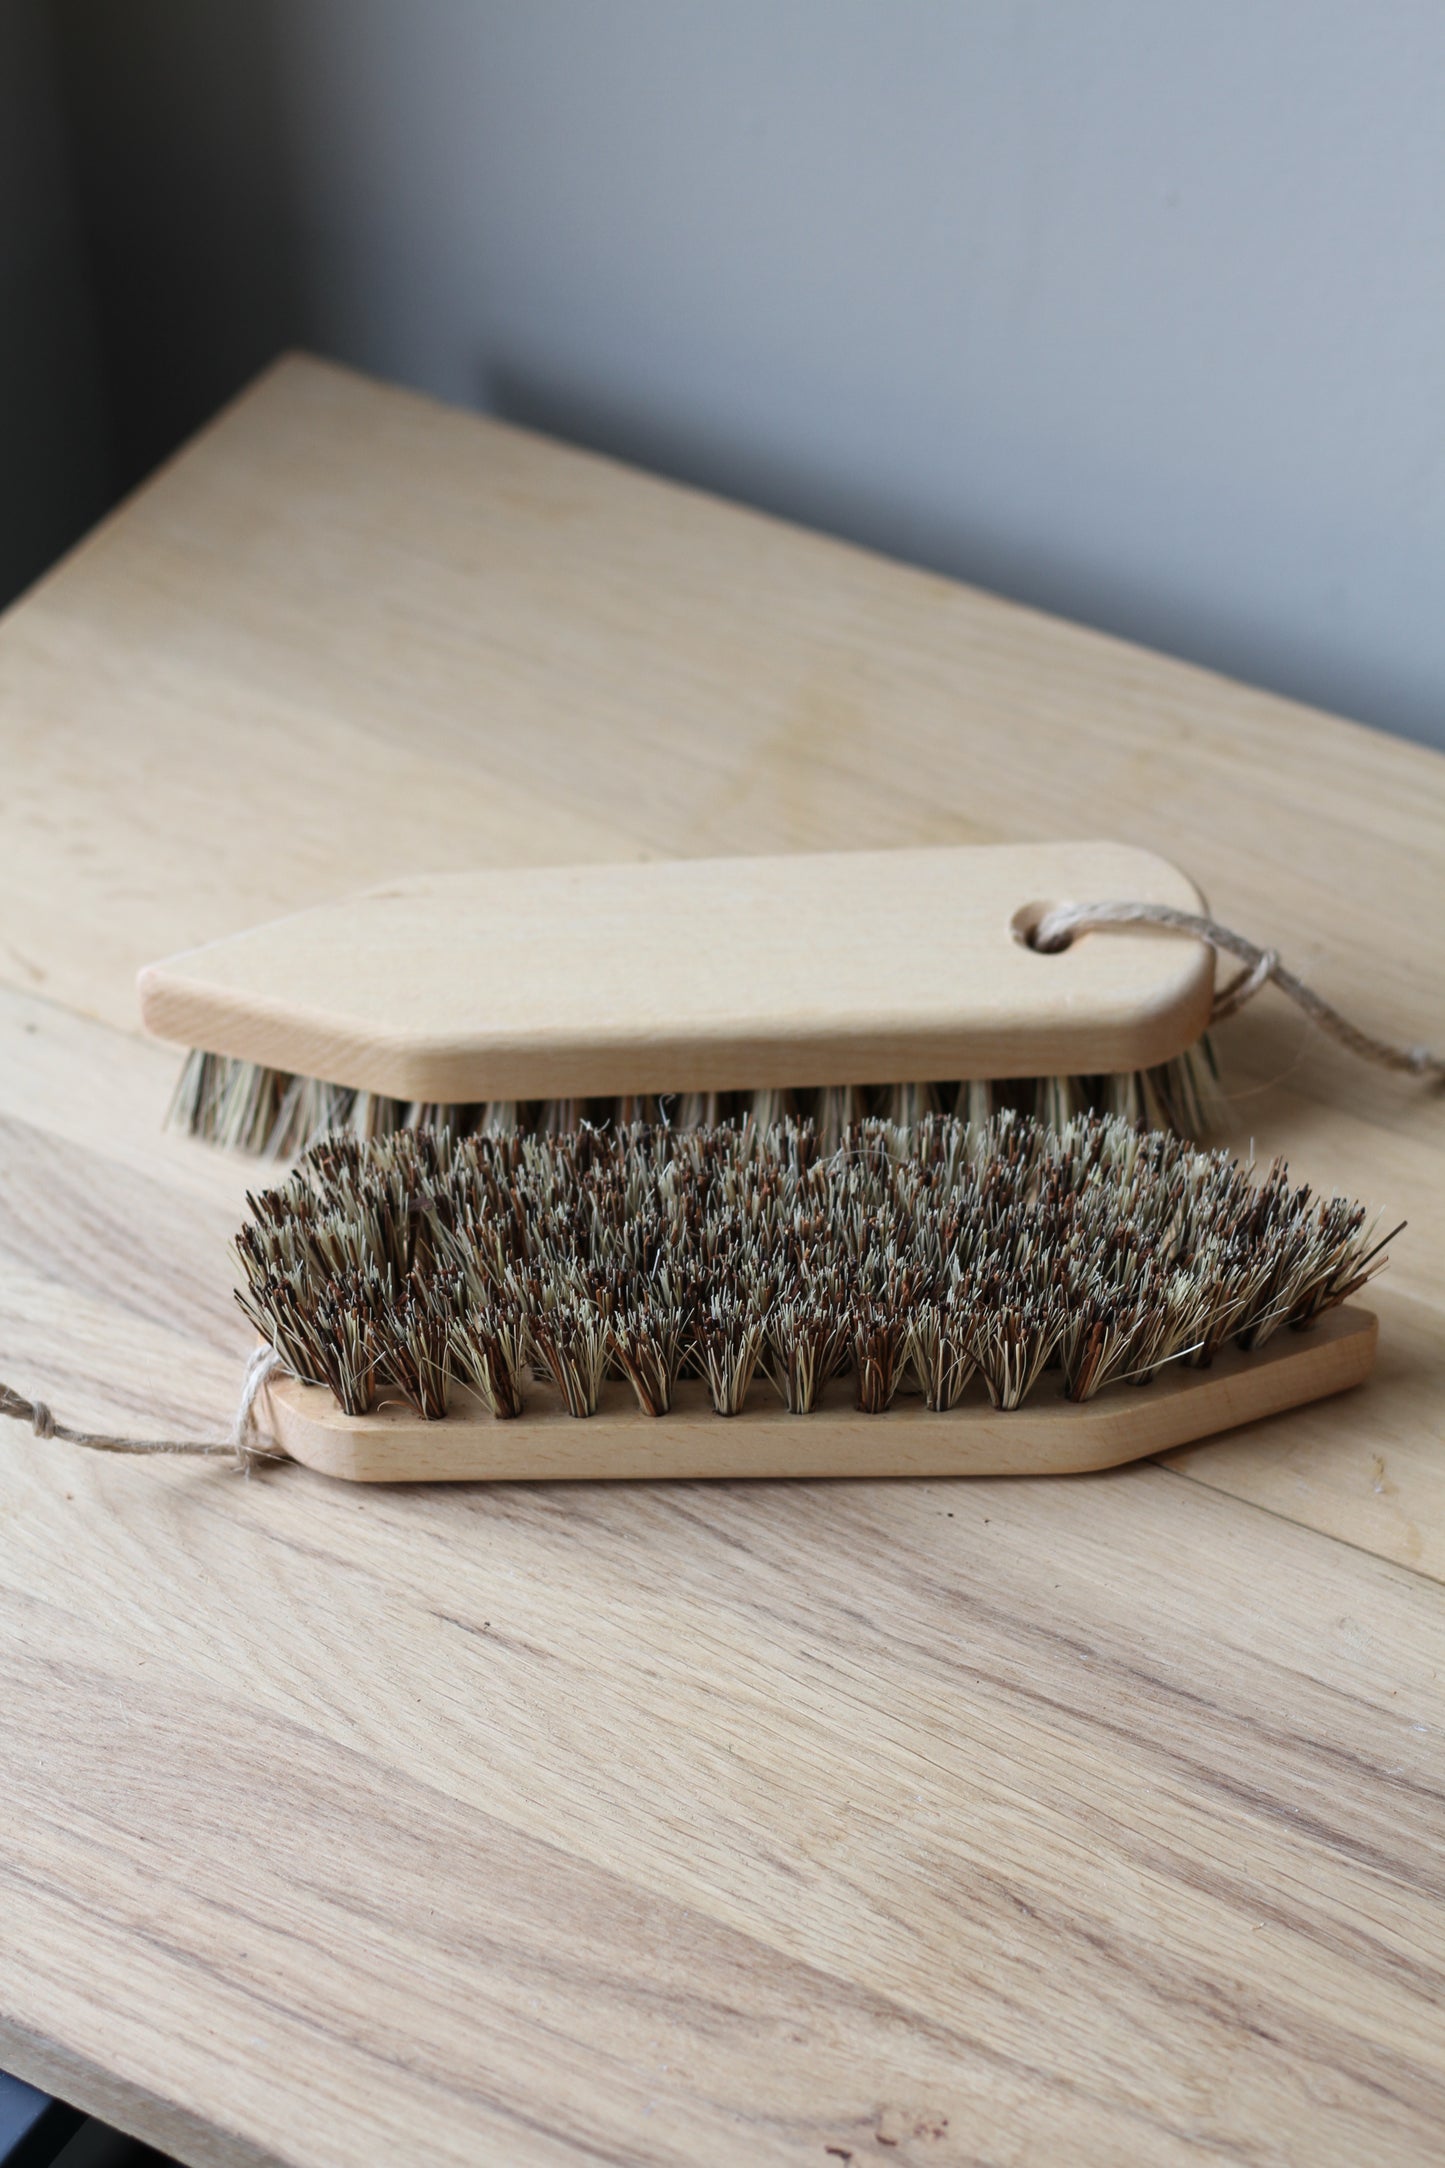 wooden scrubbing brush